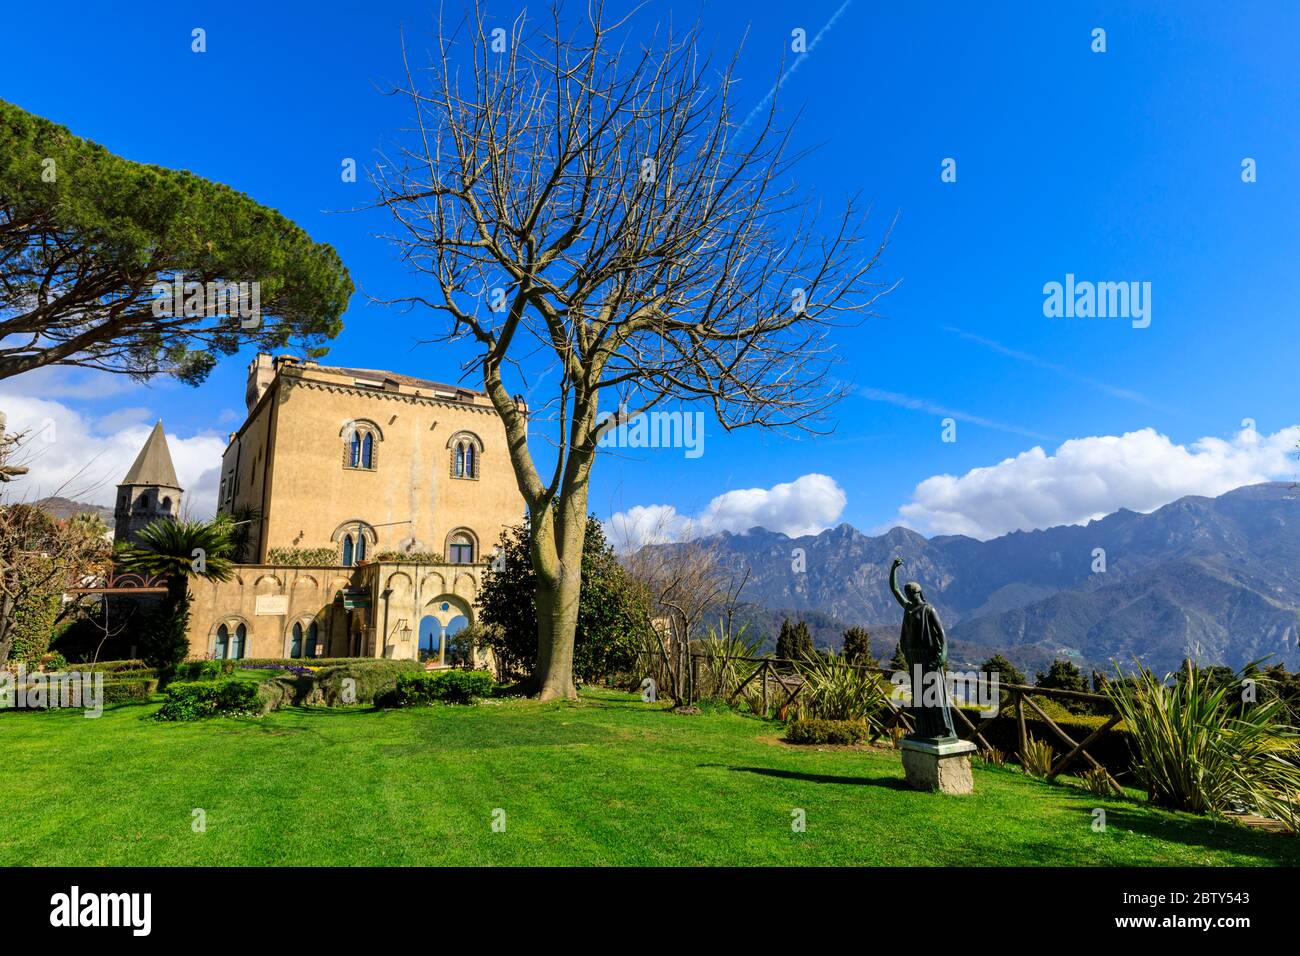 Spectacular Garden in spring, Villa Cimbrone, in cliff top Ravello, Amalfi Coast, UNESCO World Heritage Site, Campania, Italy, Europe Stock Photo